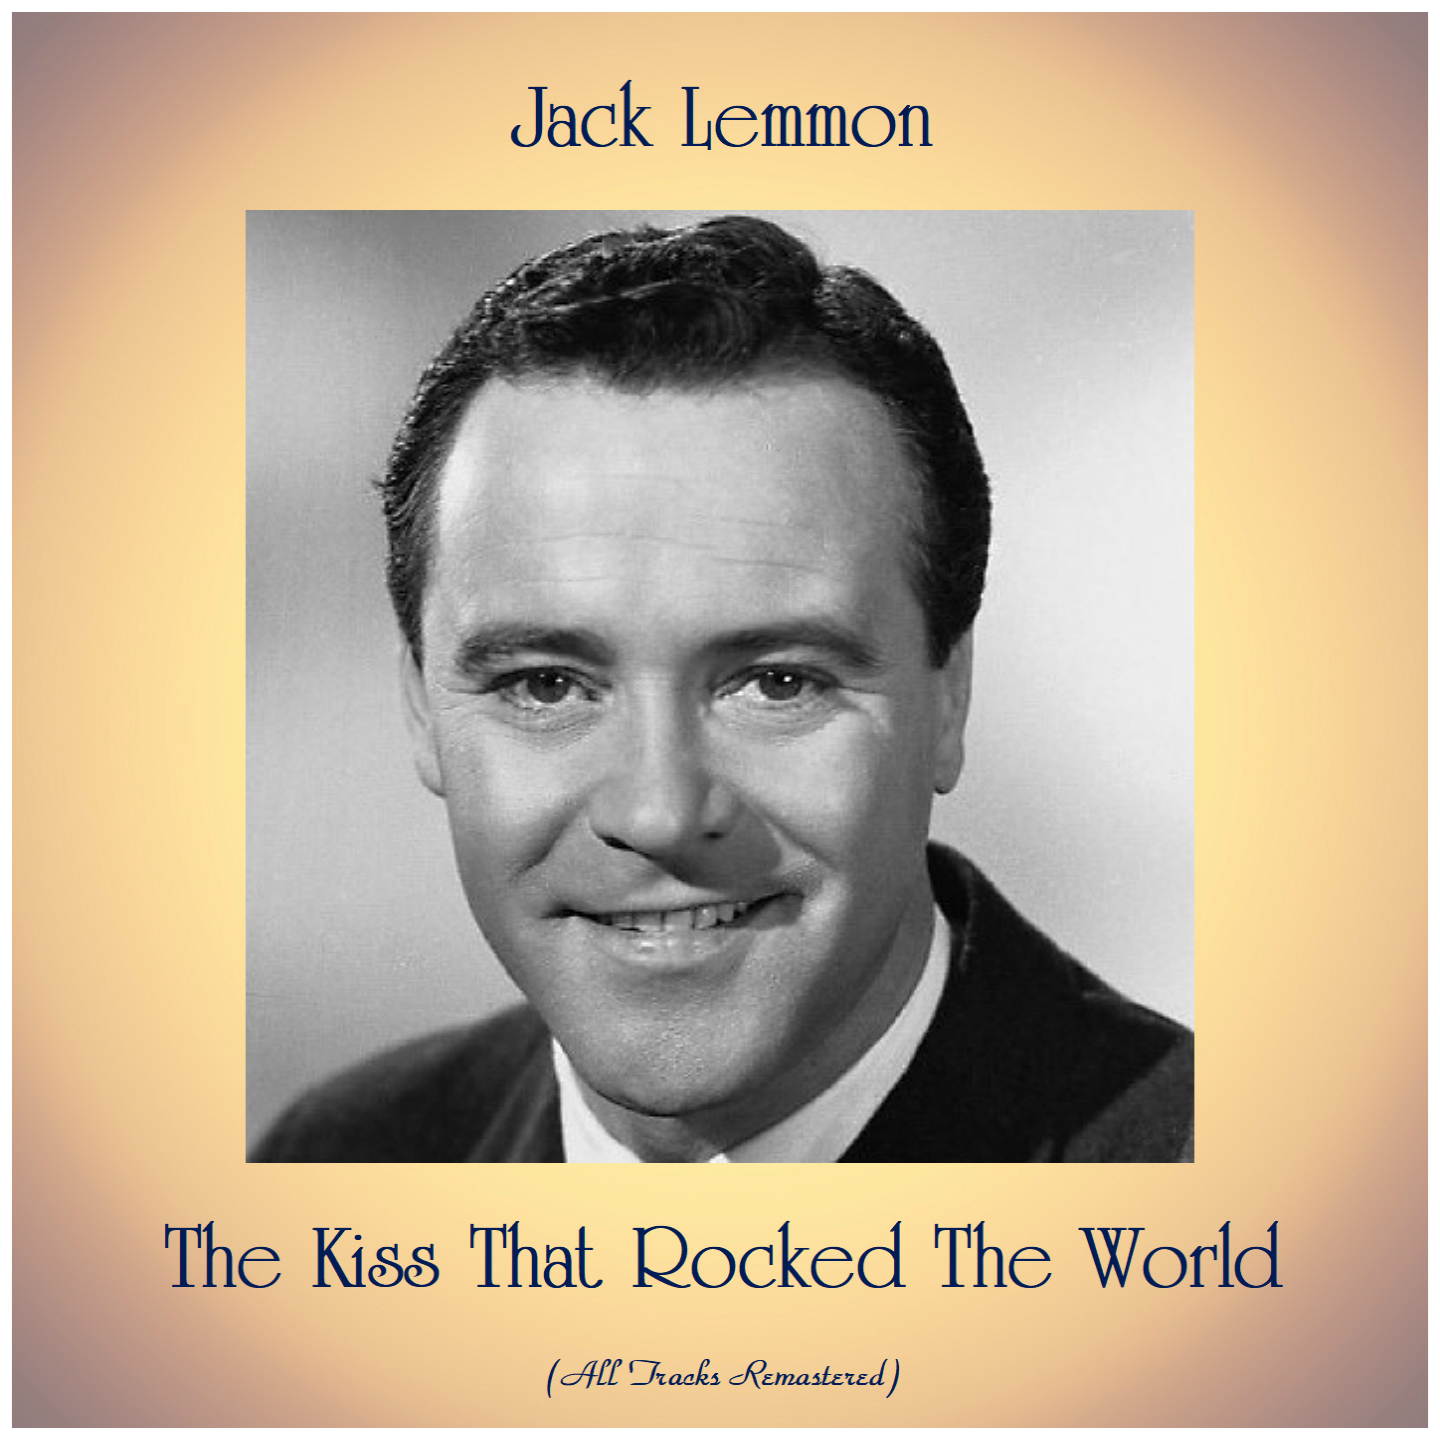 Jack lemmon net worth